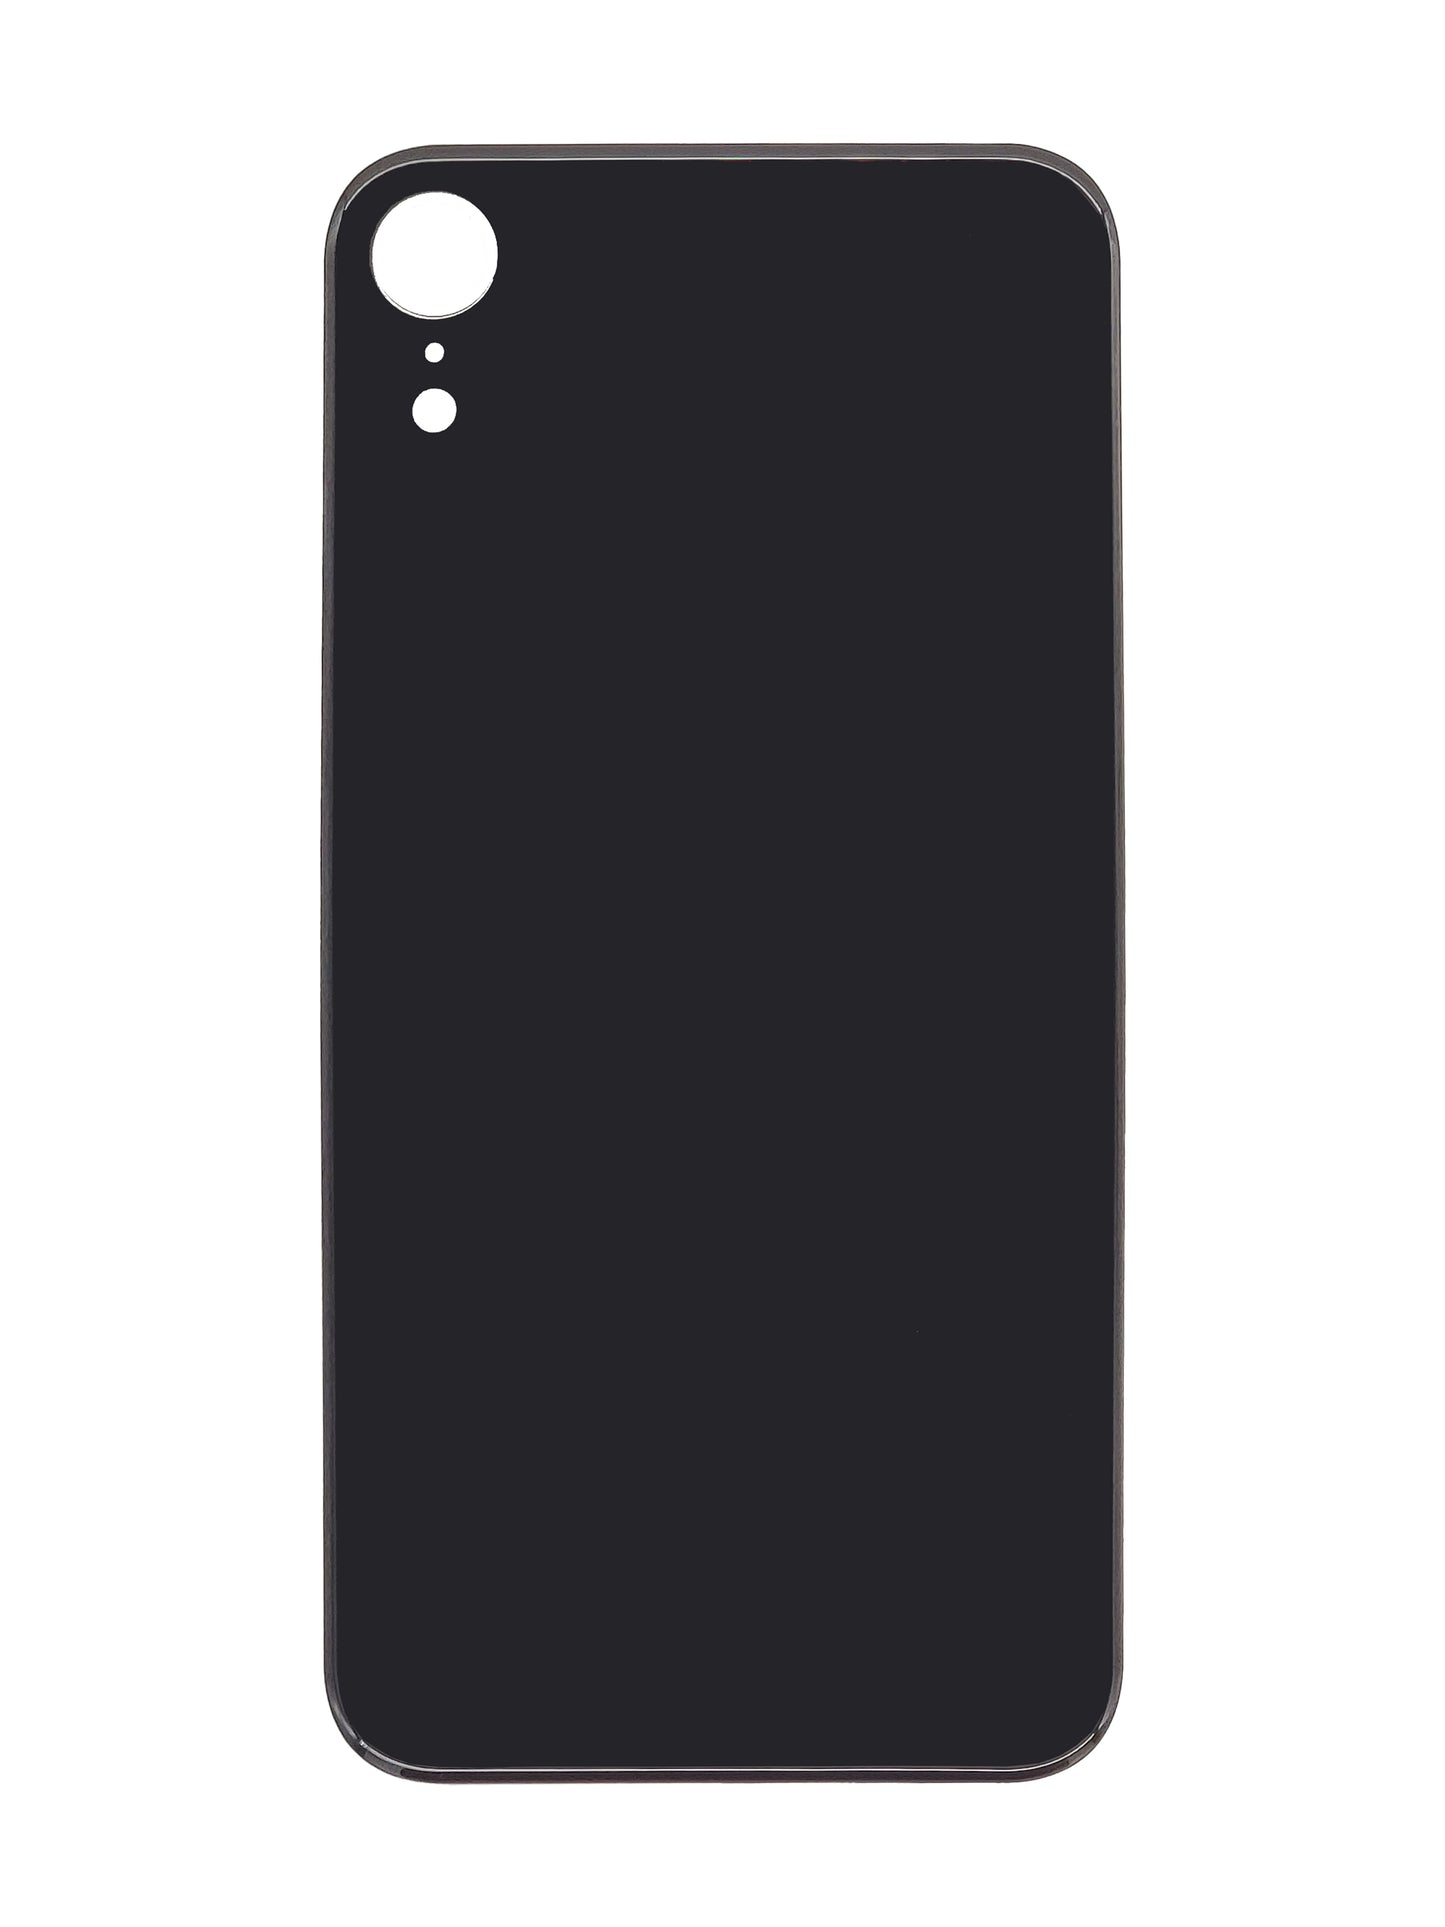 iPhone XR Back Glass (No Logo) (Black)